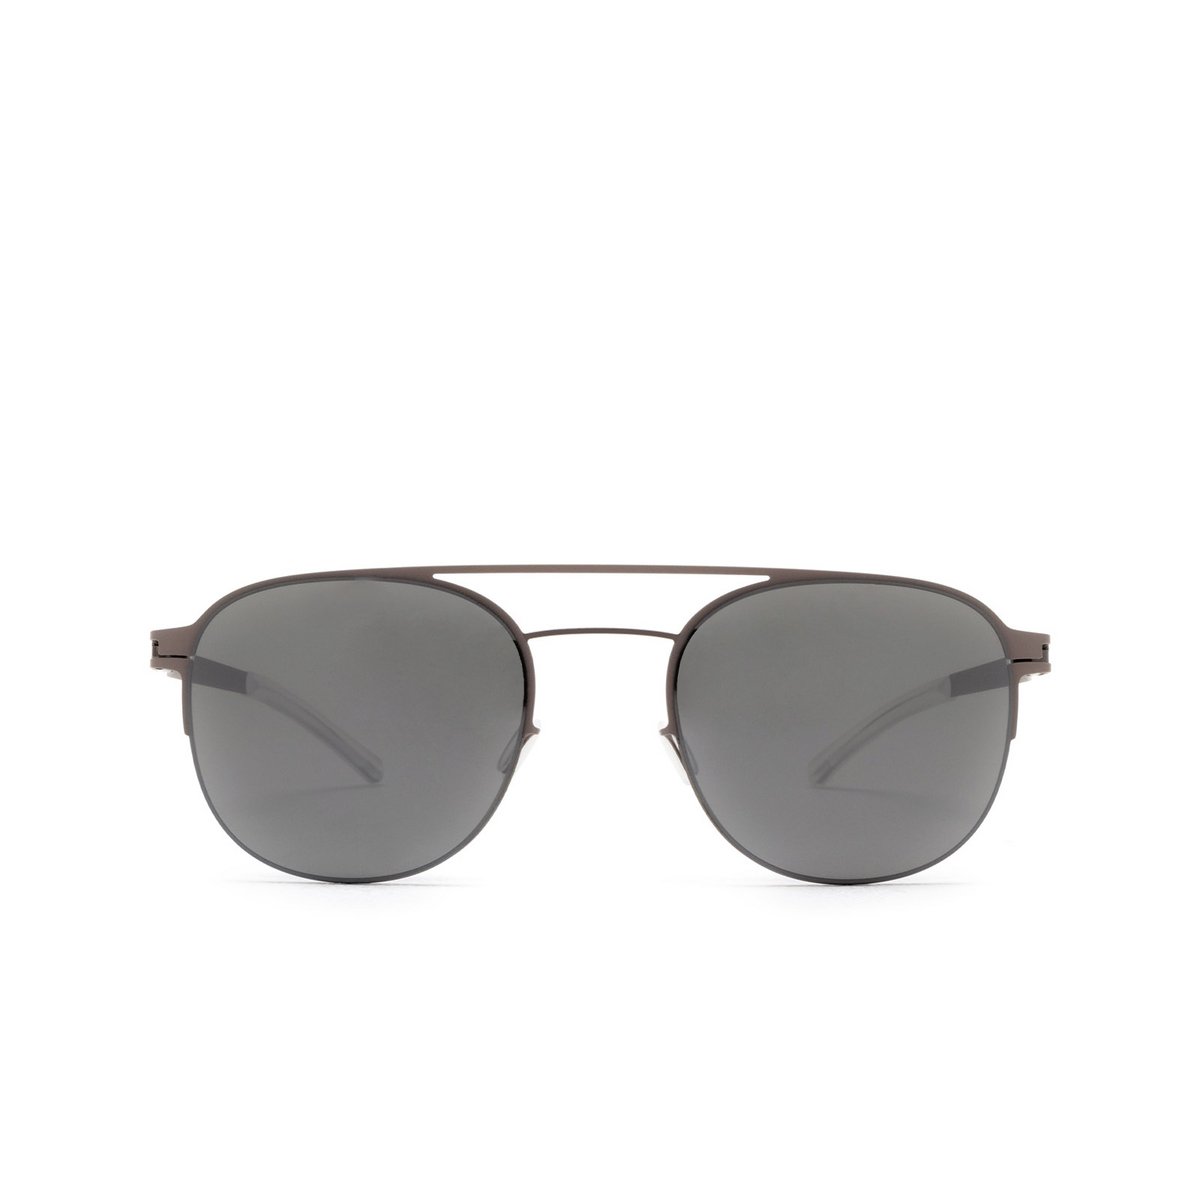 Mykita PARK Sunglasses 235 Shiny Graphite/Mole Grey - front view